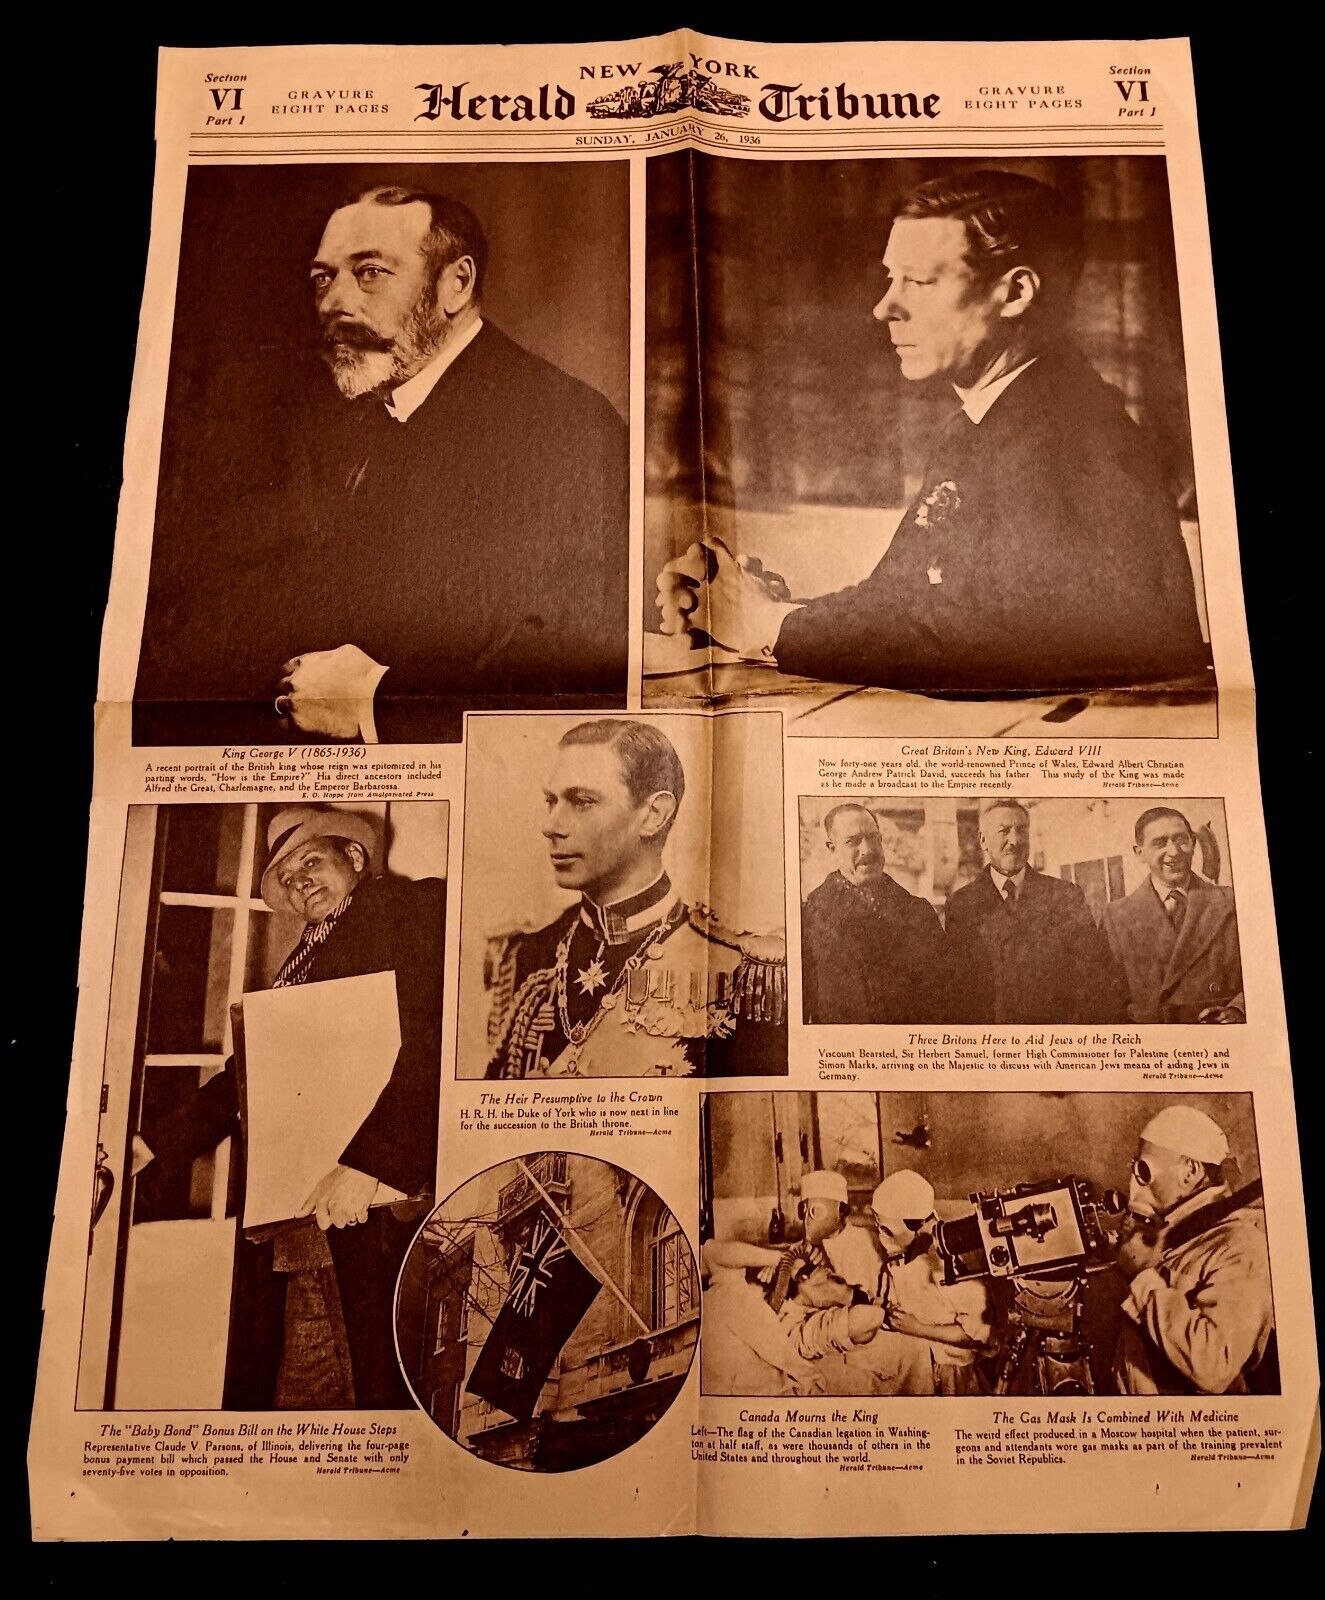 1936 New York Herald Tribune Newspaper King George V - King Edward V111